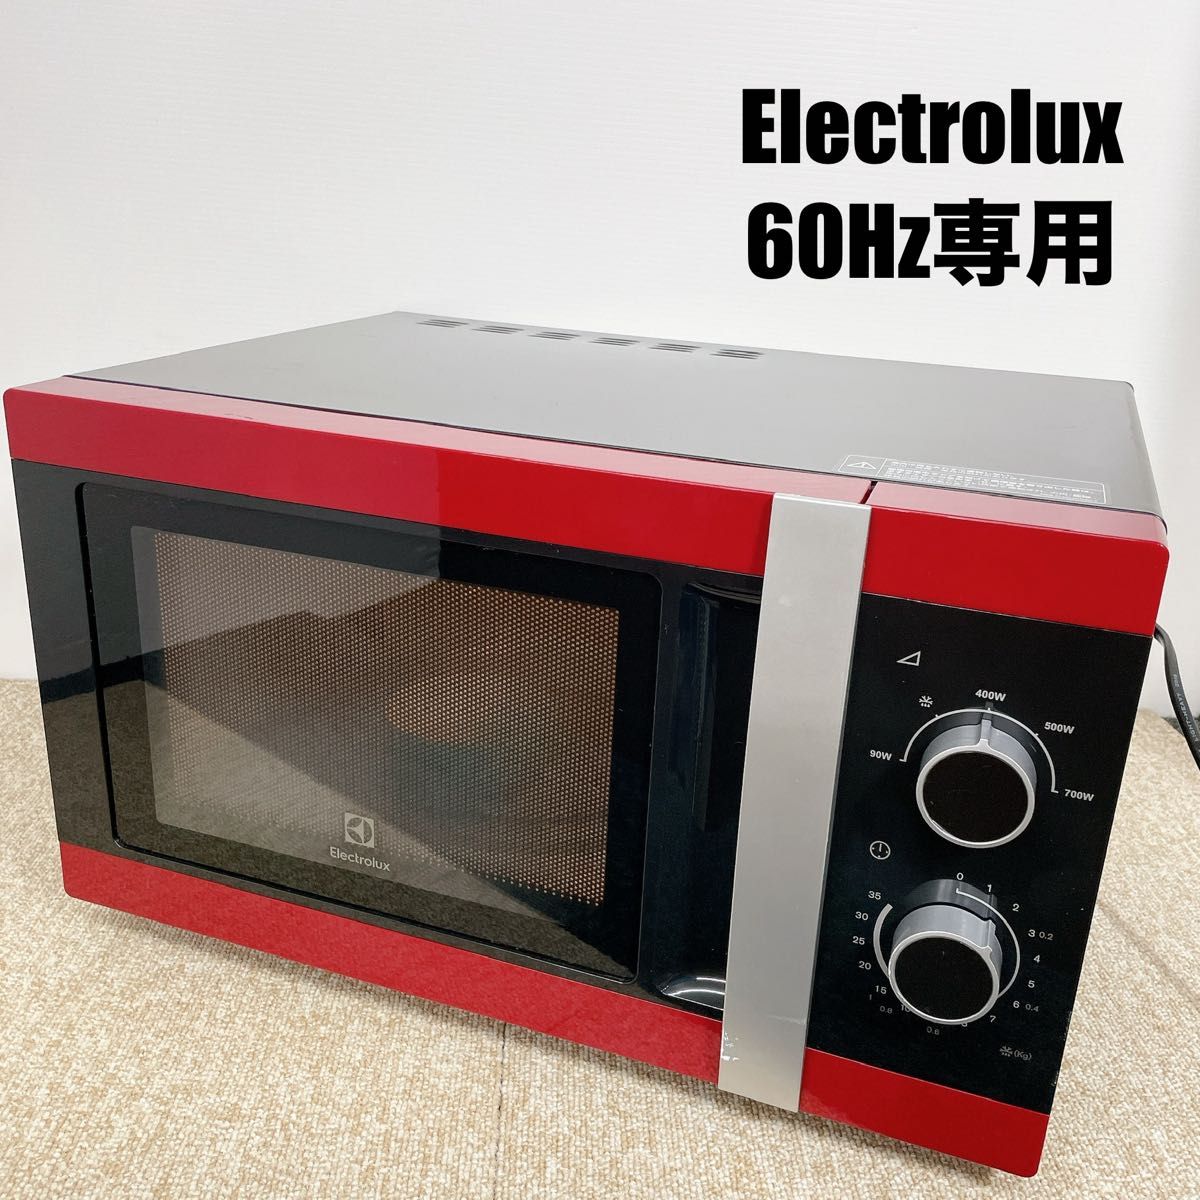 Electrolux 60Hz西日本用電子レンジ EMM2300JR6